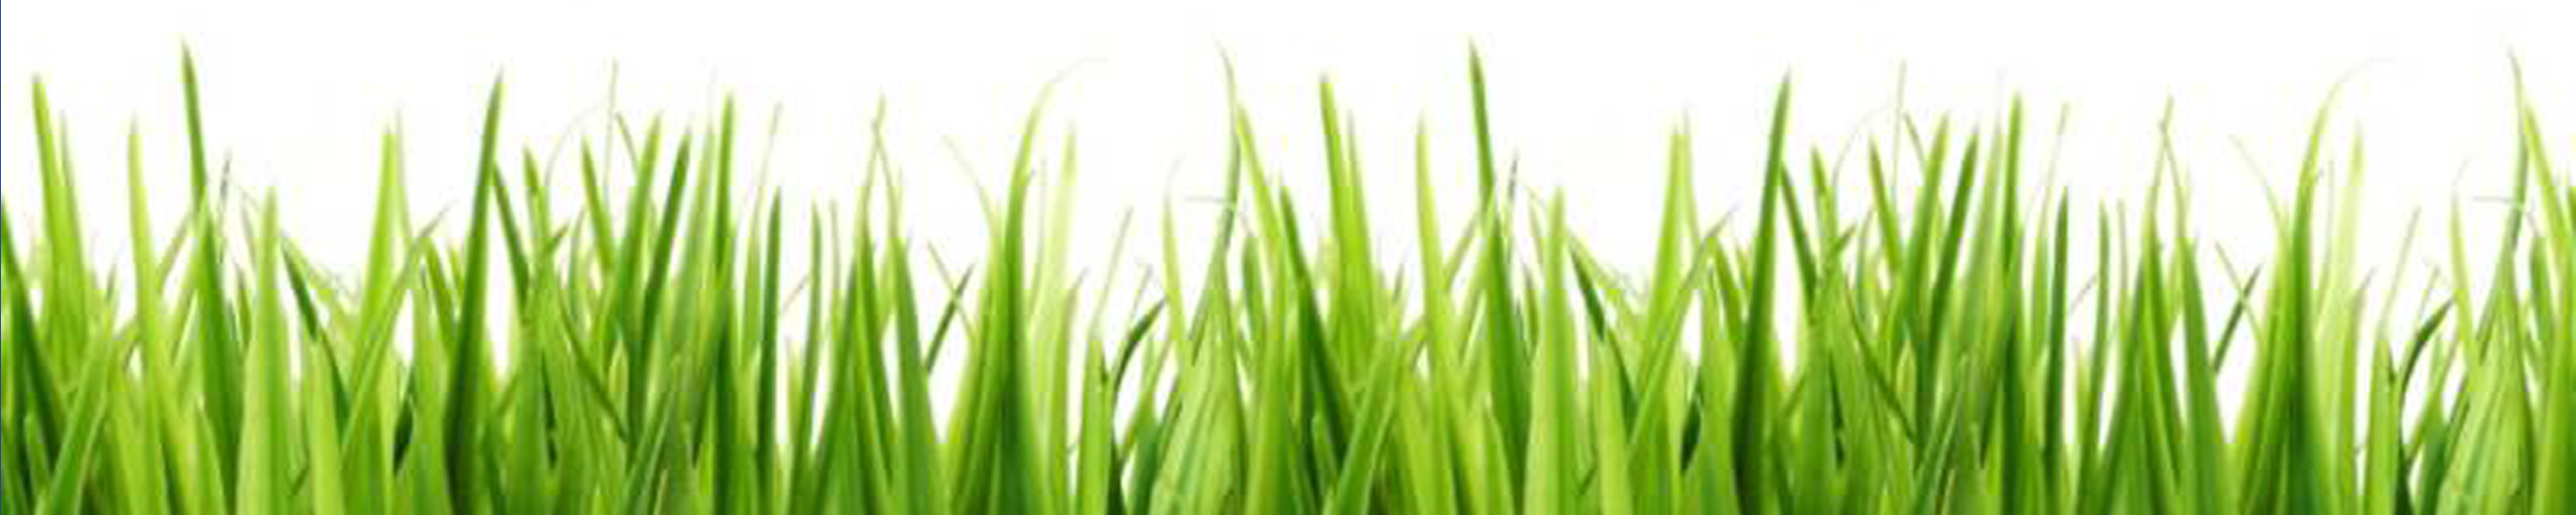 free clipart green grass - photo #43